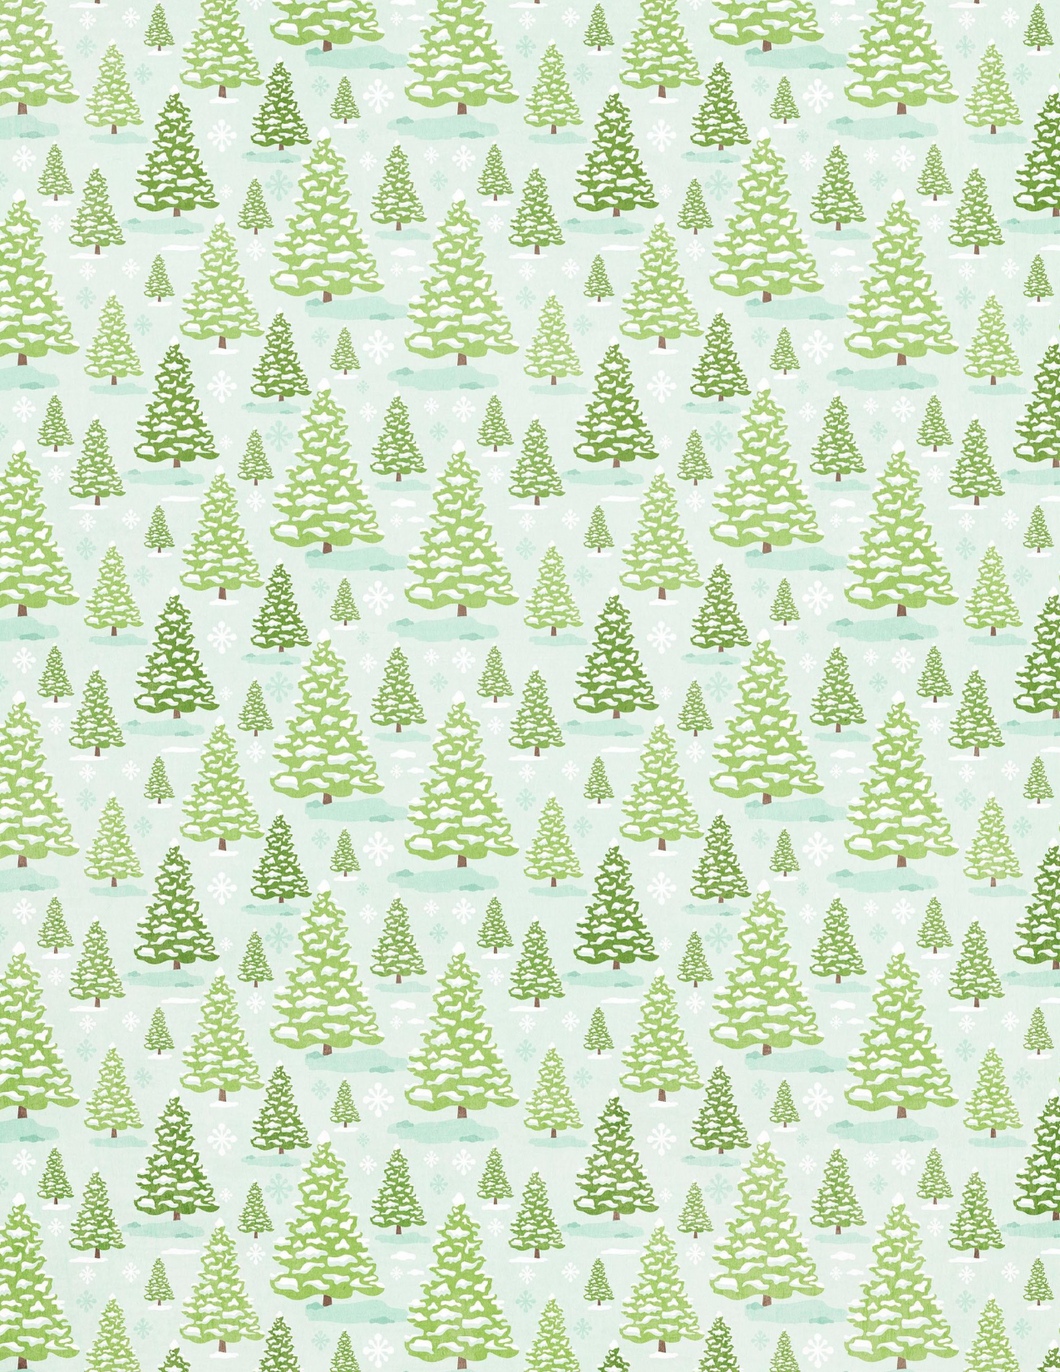 Snowy Evergreen Trees Scrapbook Paper